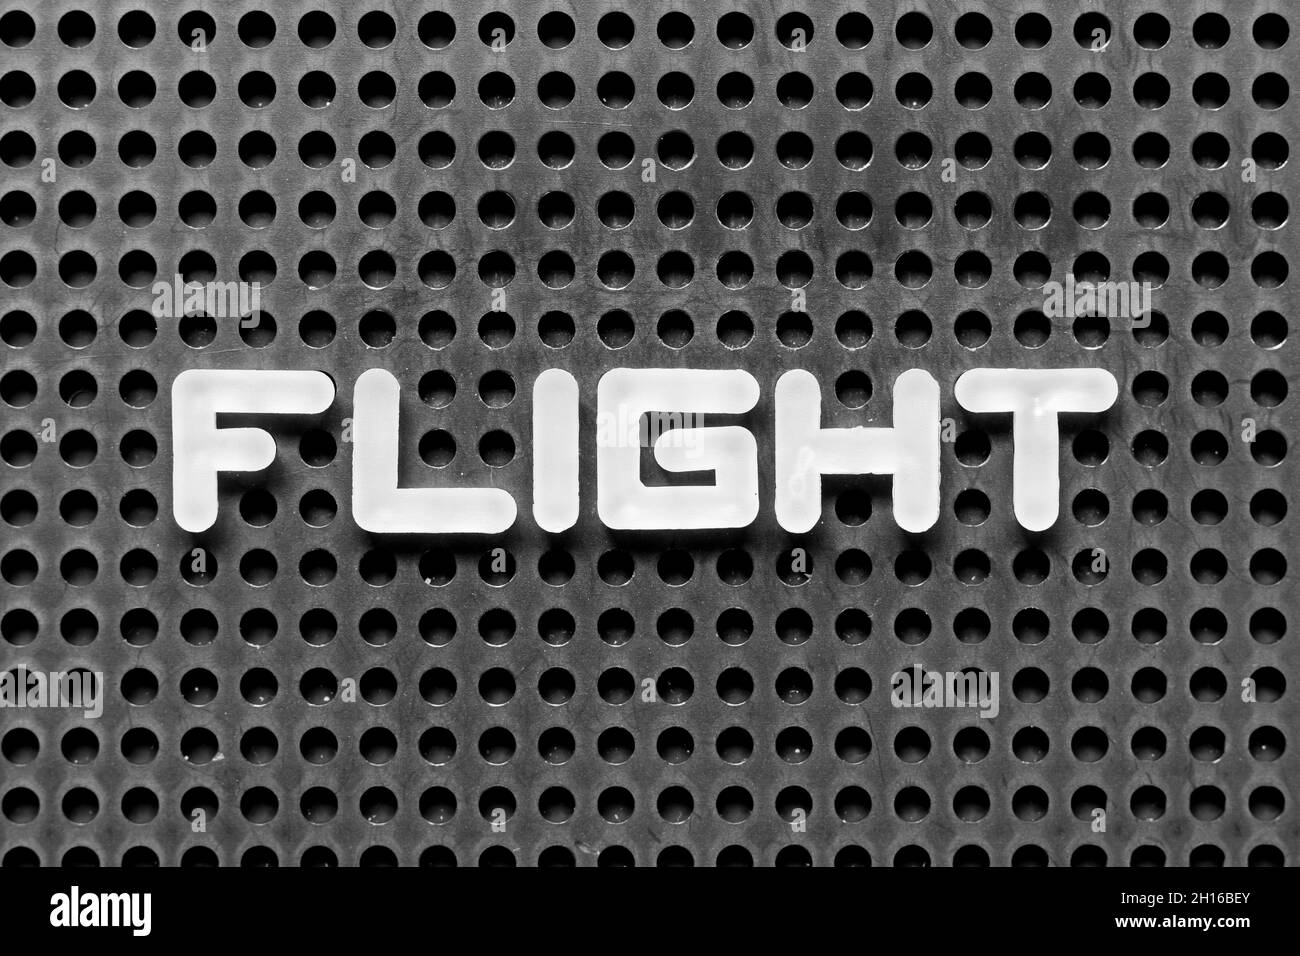 White alphabet letter in word flight on black pegboard background Stock Photo